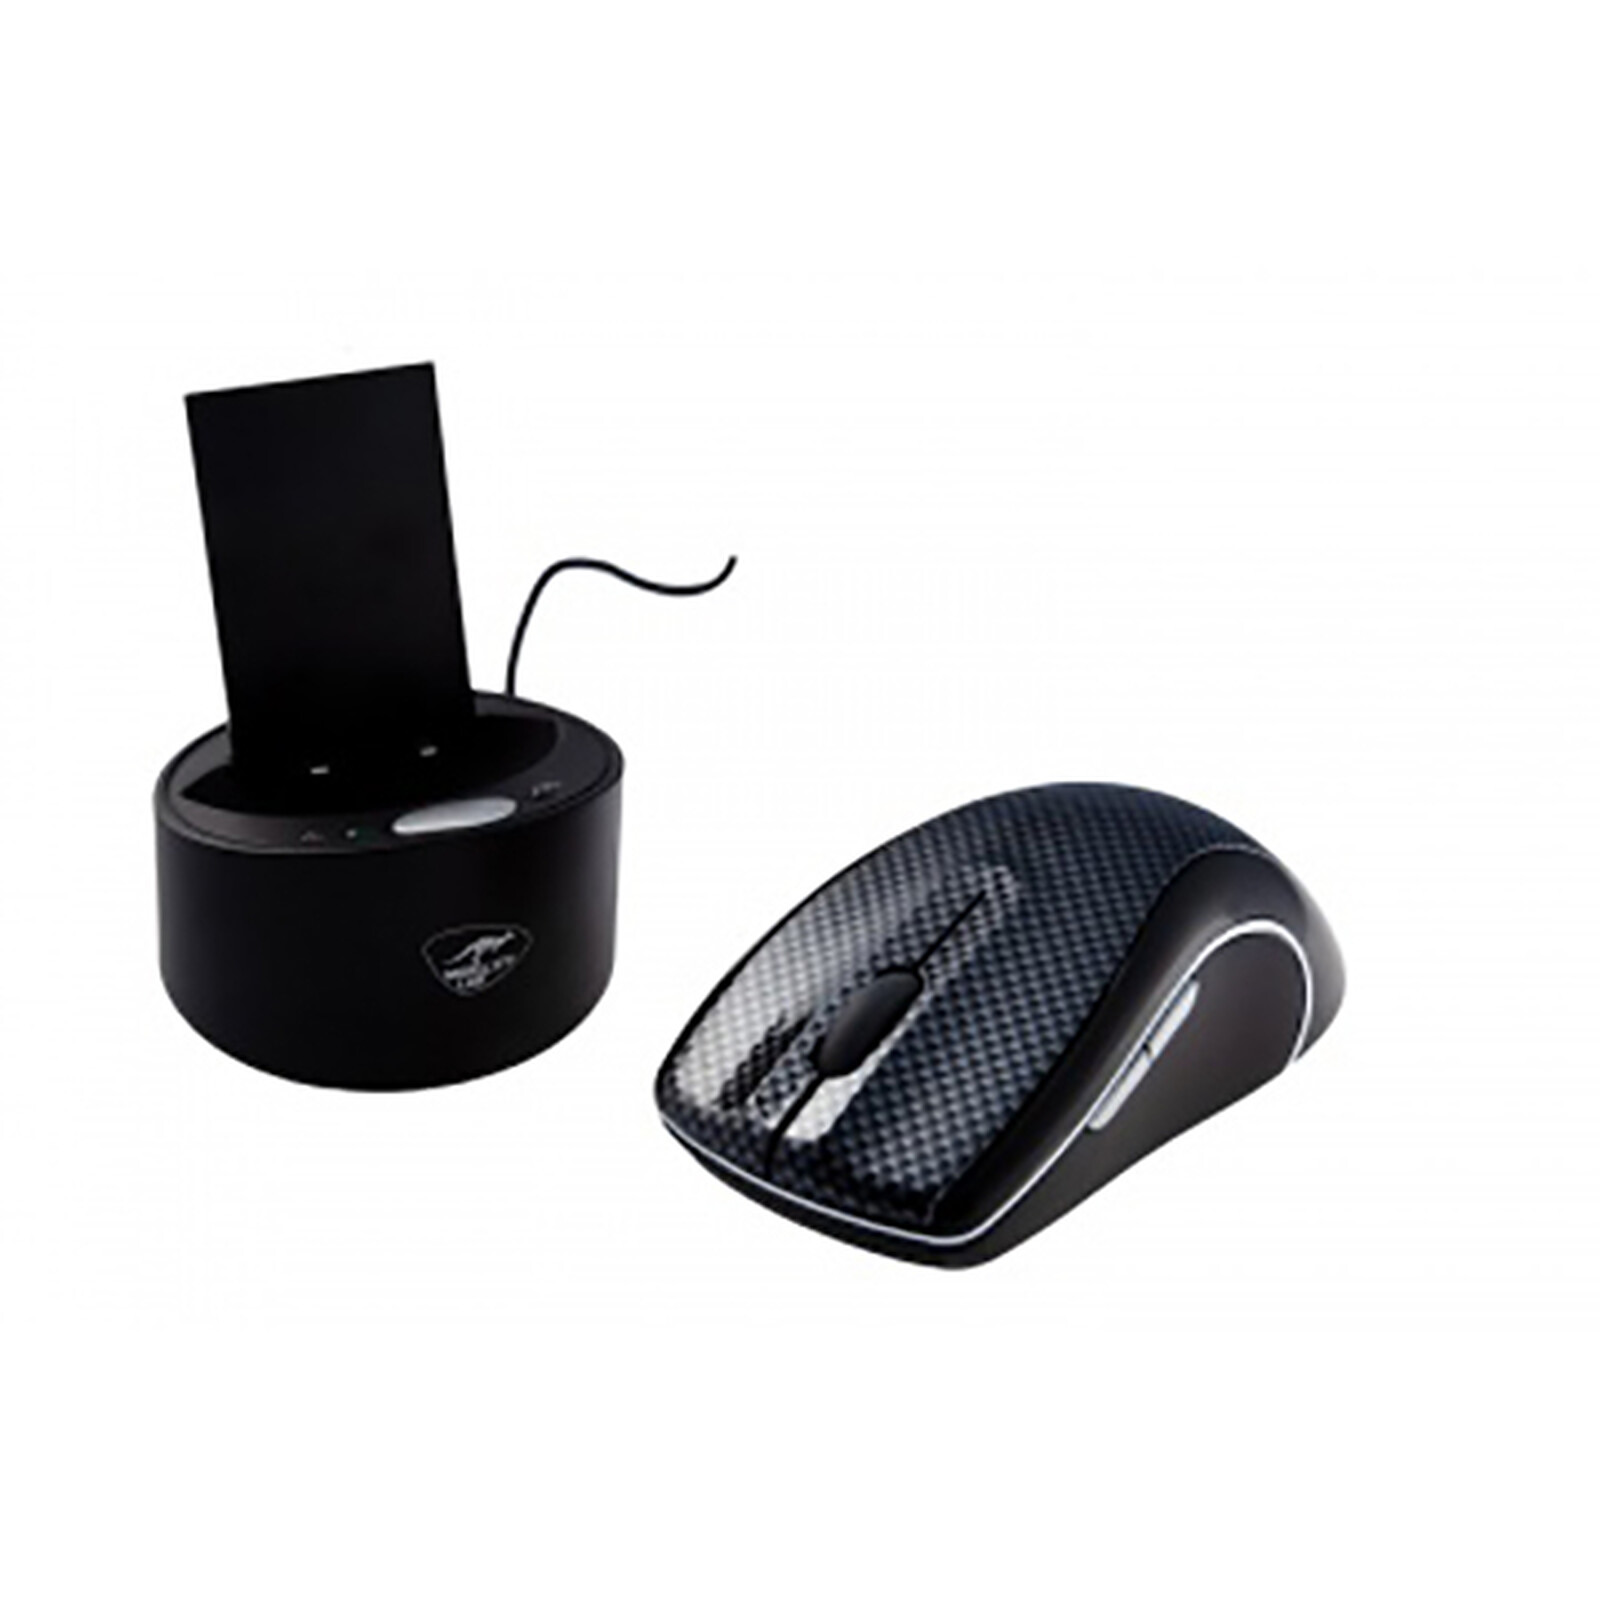 Mouse ergonomico senza fili Mobility Lab Premium